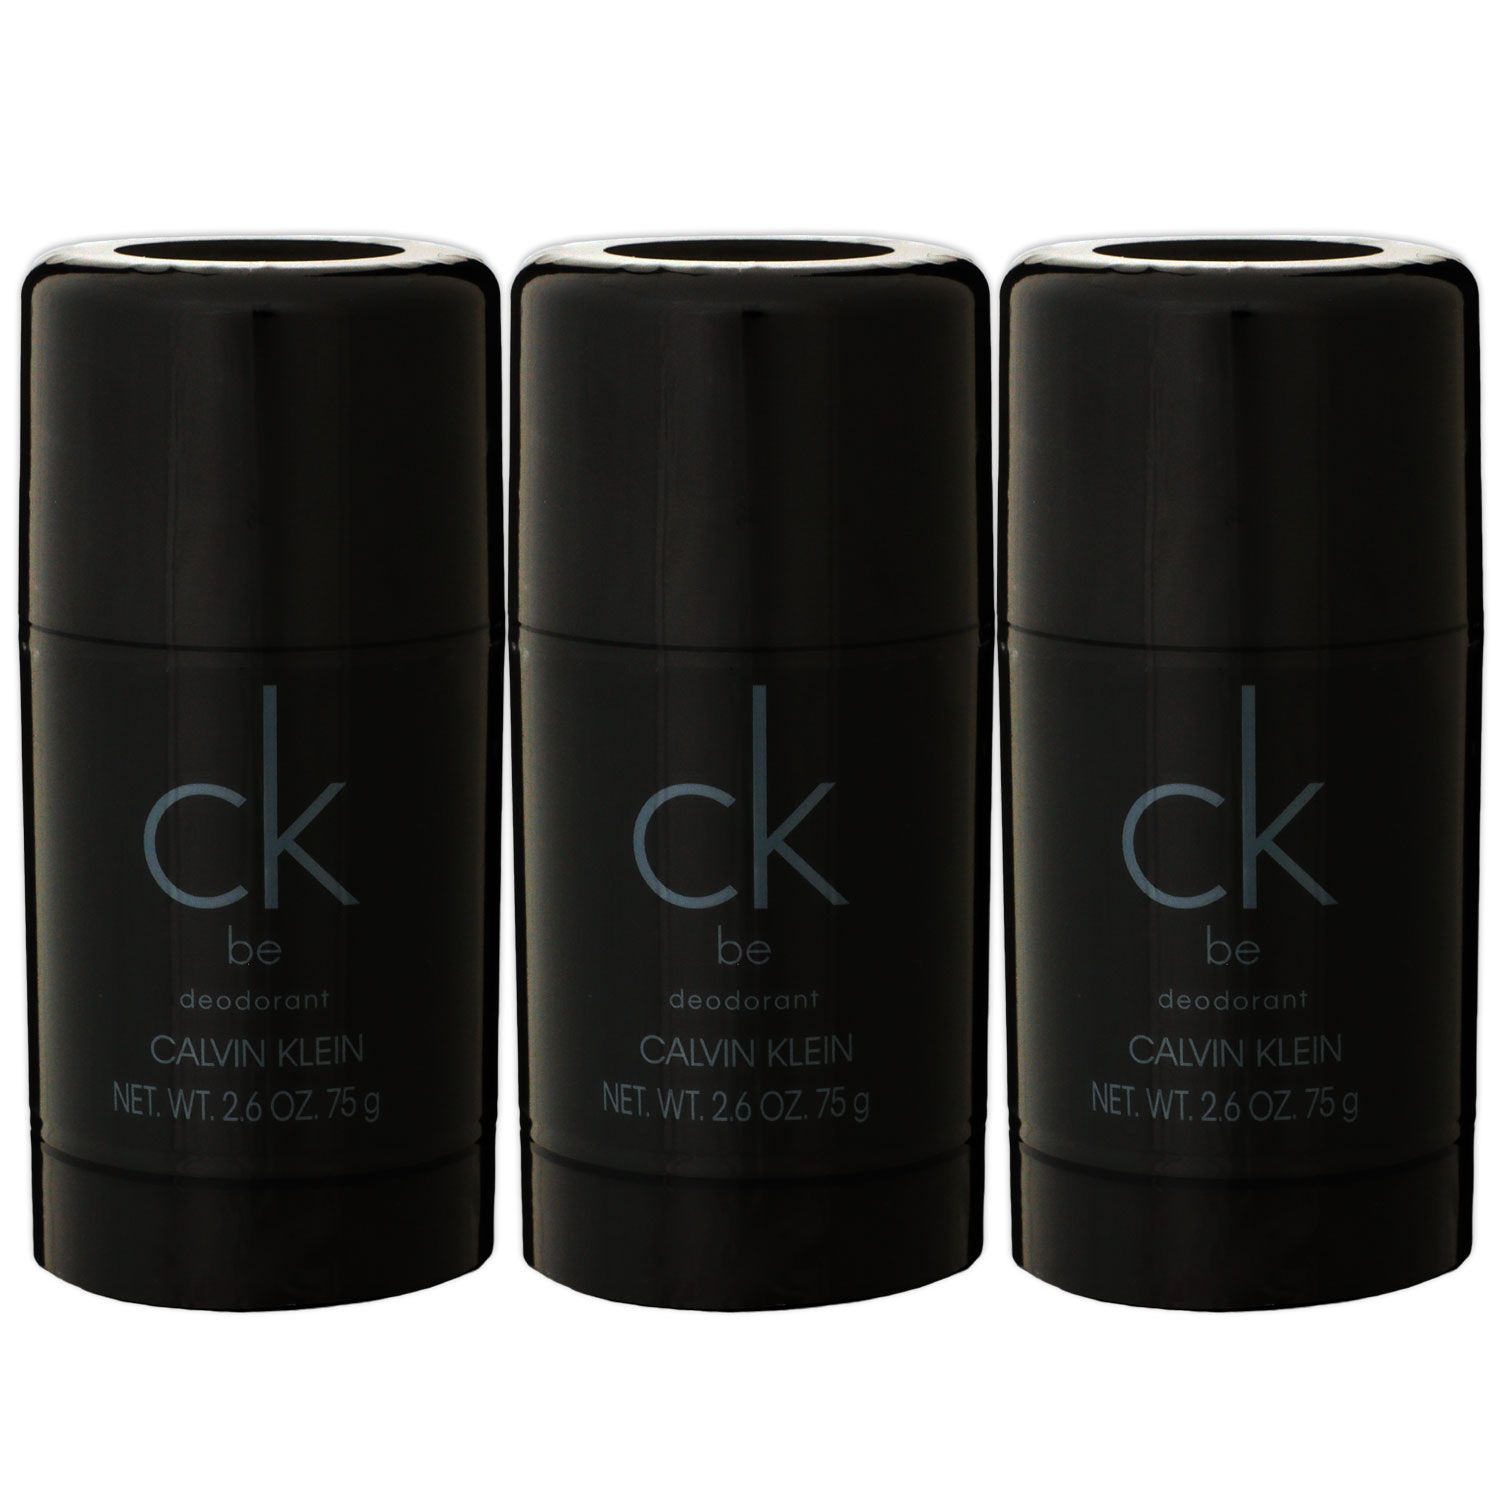 Calvin Klein CK Be 3 x 75 ml Deostick Deodorant Stick Set bei Riemax